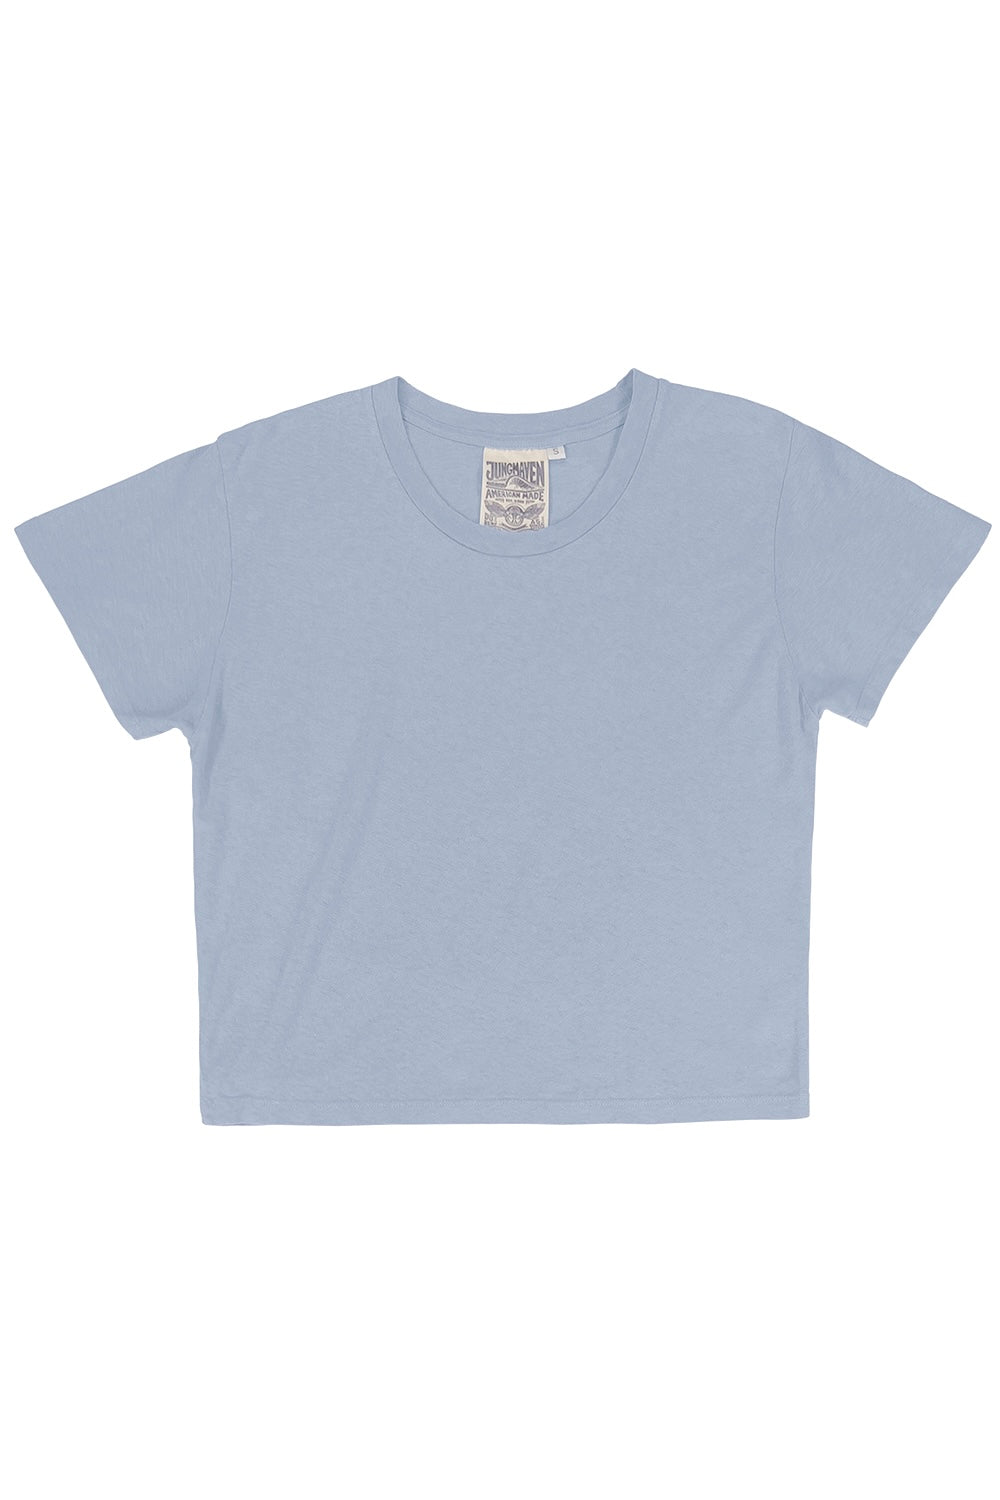 Cropped Lorel Tee | Jungmaven Hemp Clothing & Accessories / Color:Coastal Blue